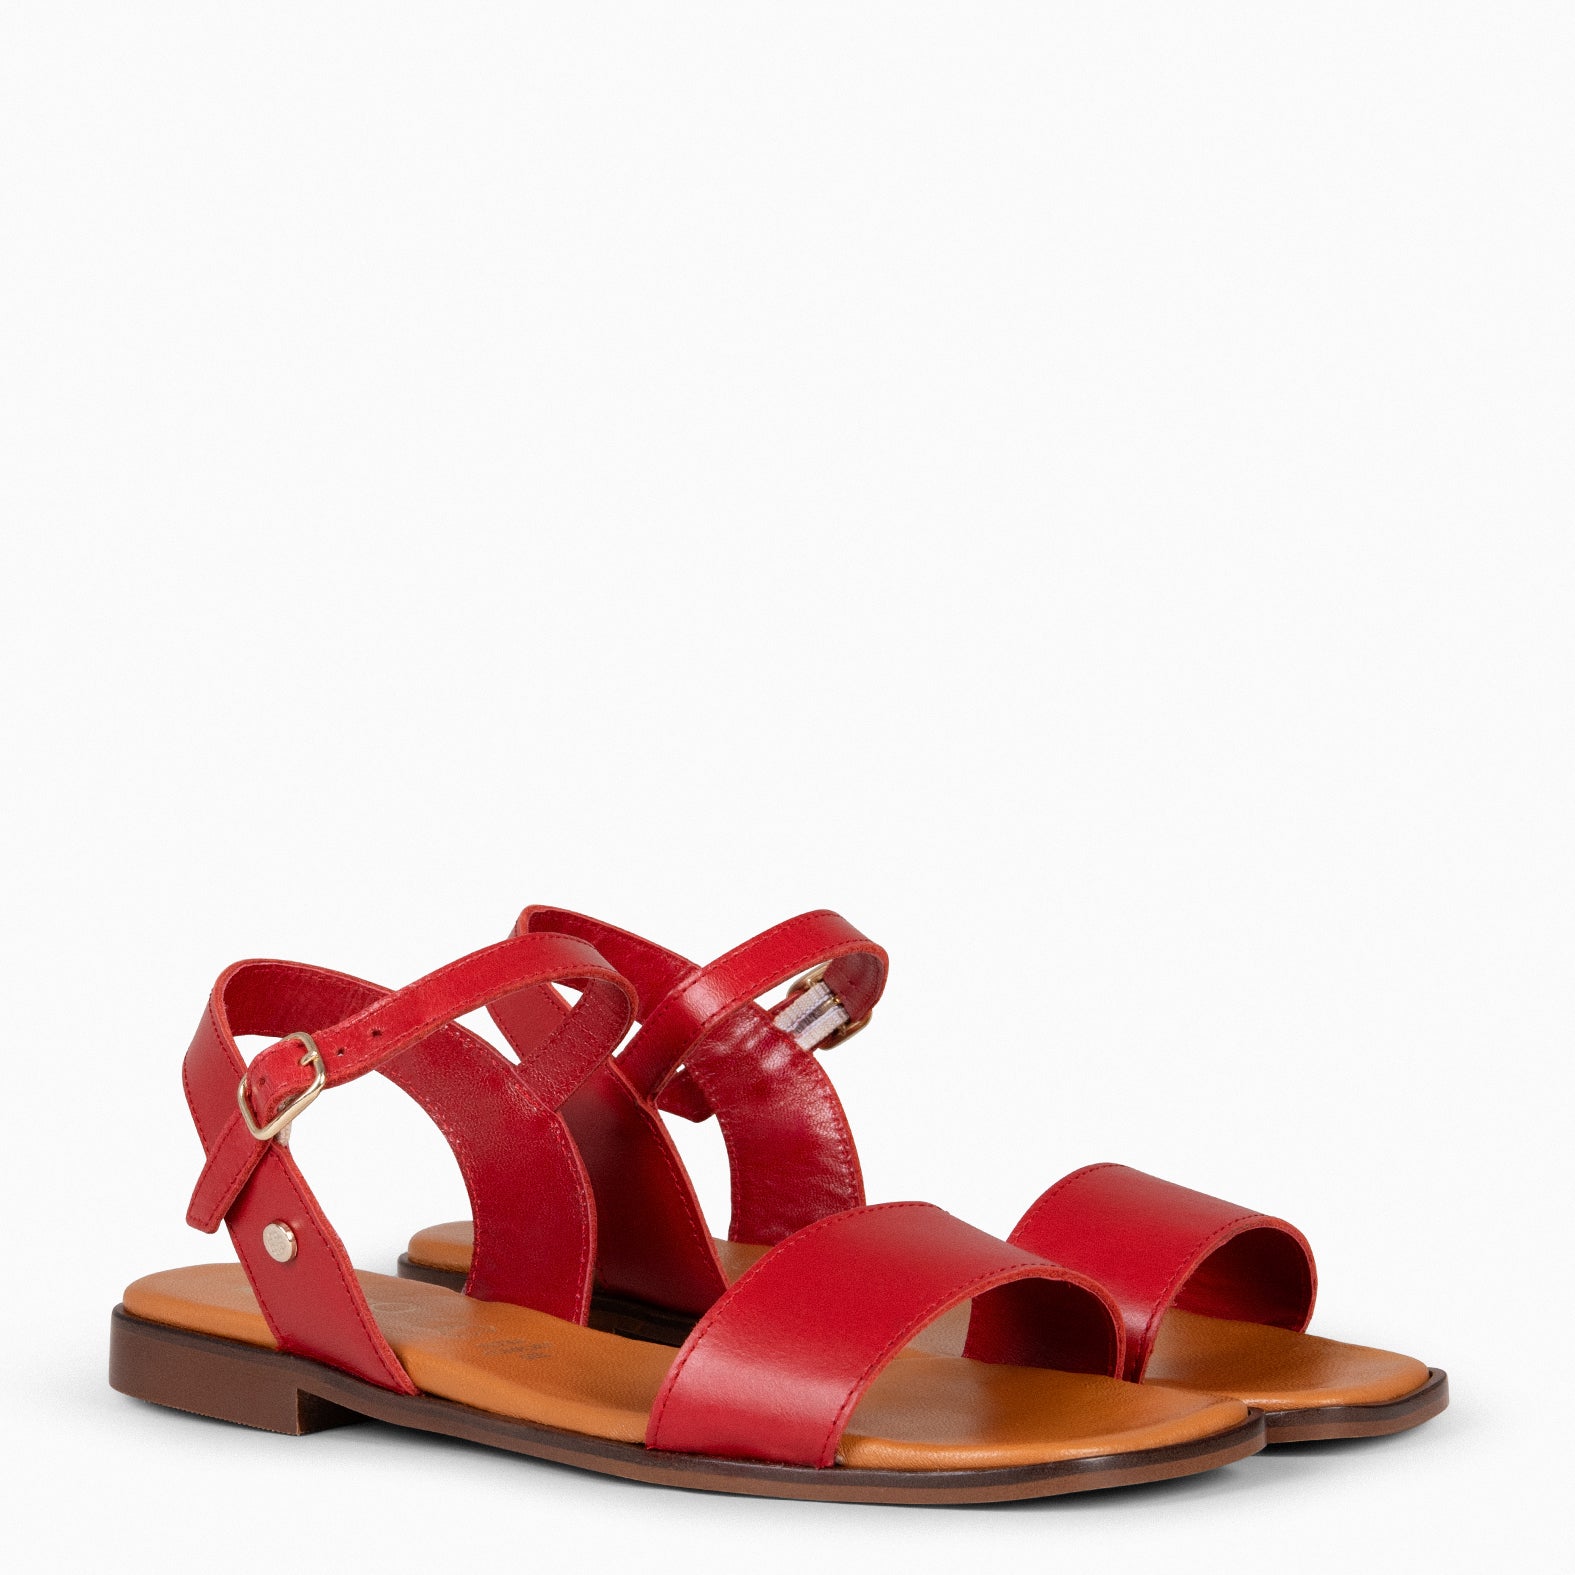 SANTORINI - RED Flat Sandals